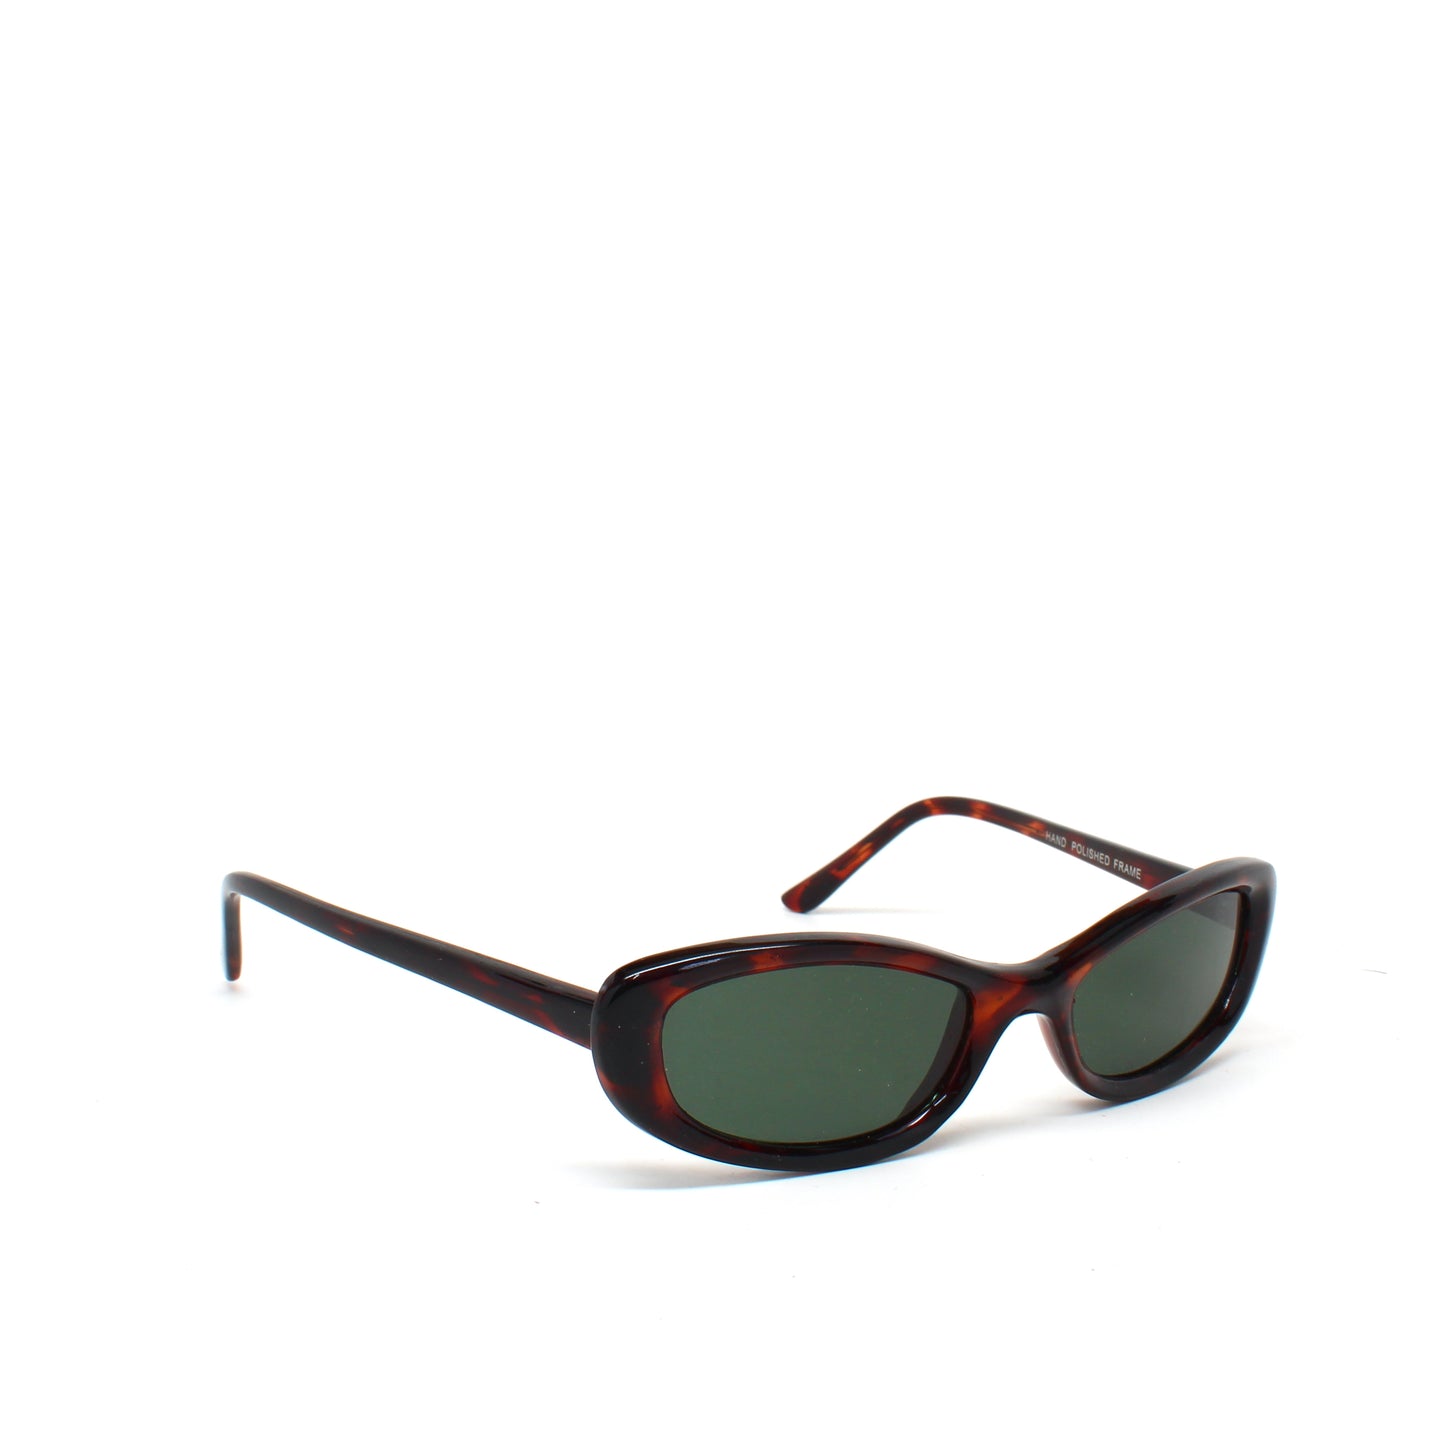 Vintage Small Sized 90s Mod Slim Narrow Rectangle Shape Sunglasses - Tortoise